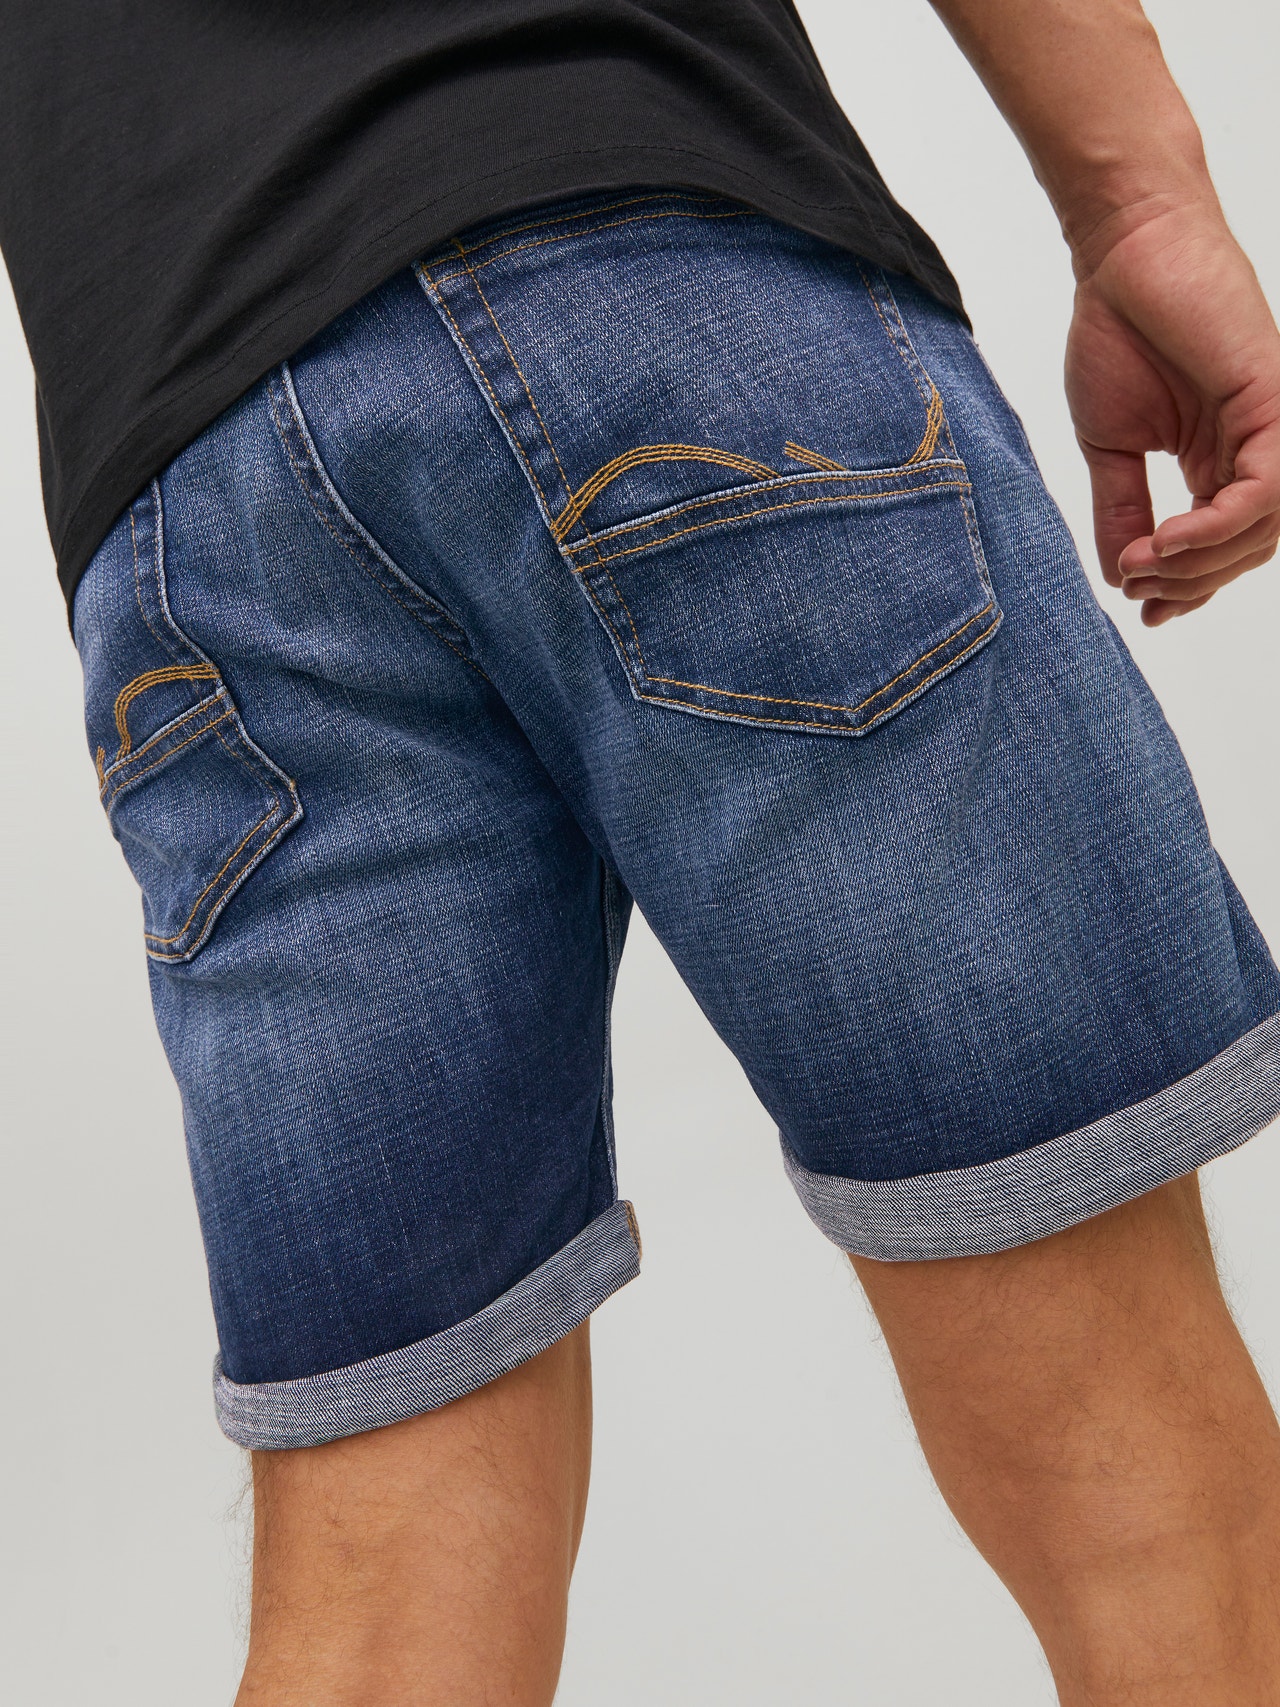 Jack & Jones Relaxed Fit Jeans Shorts -Blue Denim - 12236192